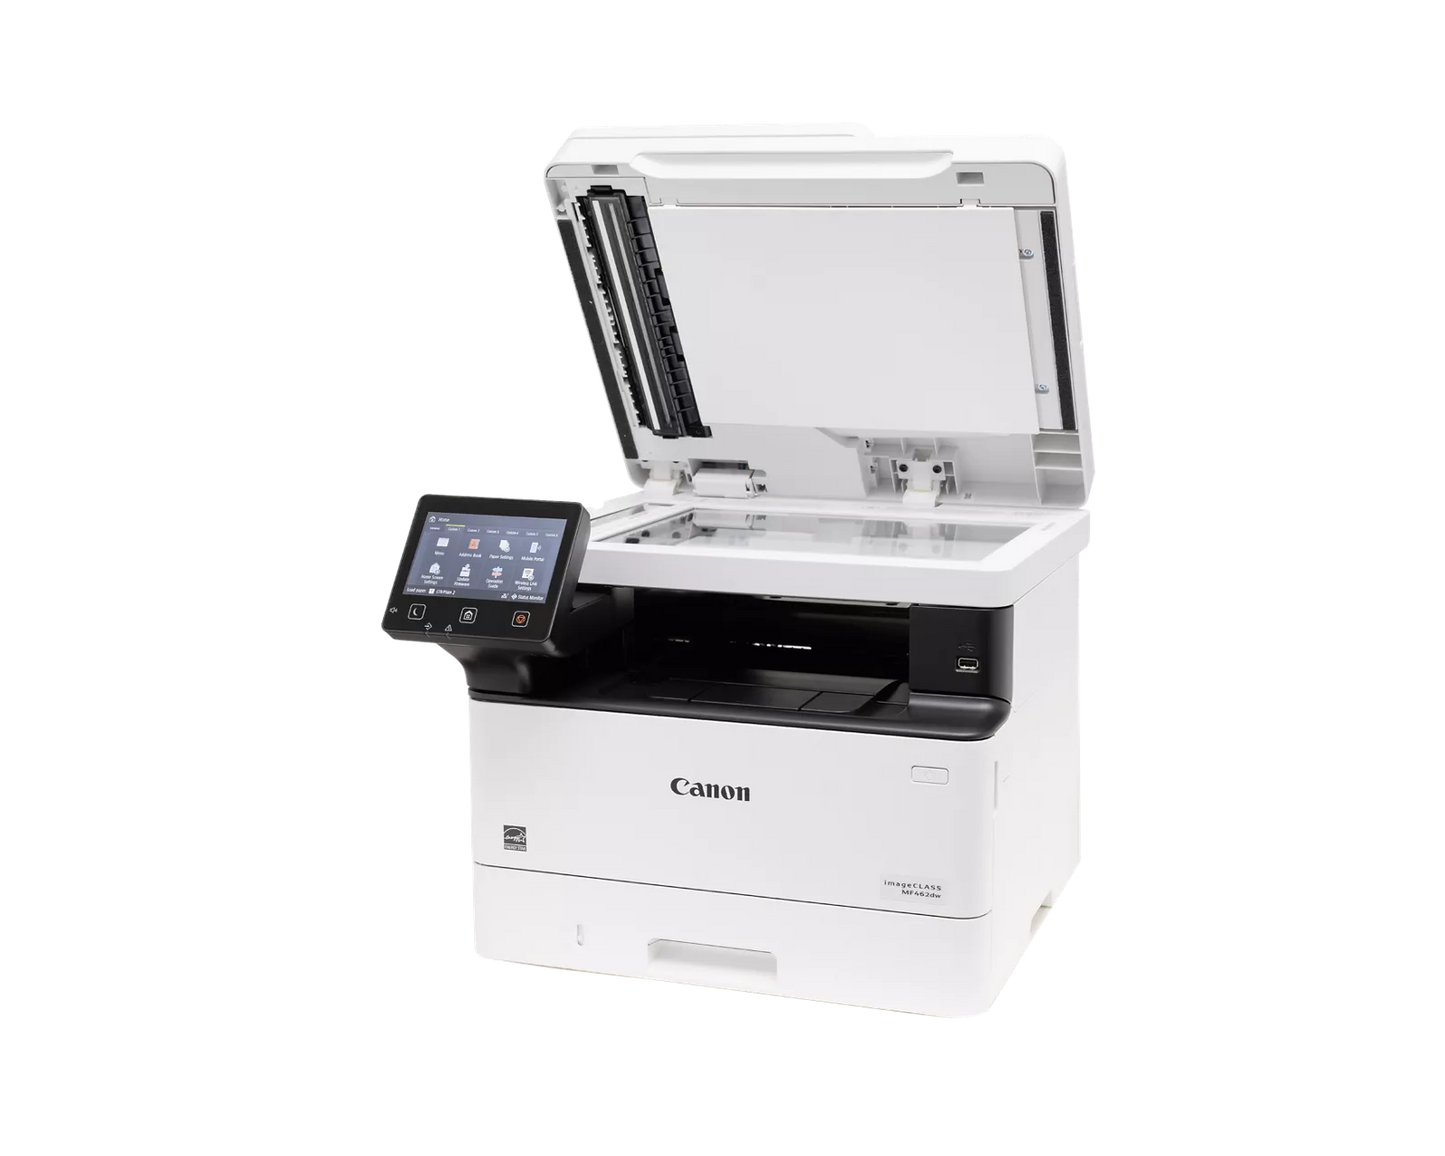 Canon imageCLASS MF462dw - All-in-One, Wireless, Duplex Laser Printer